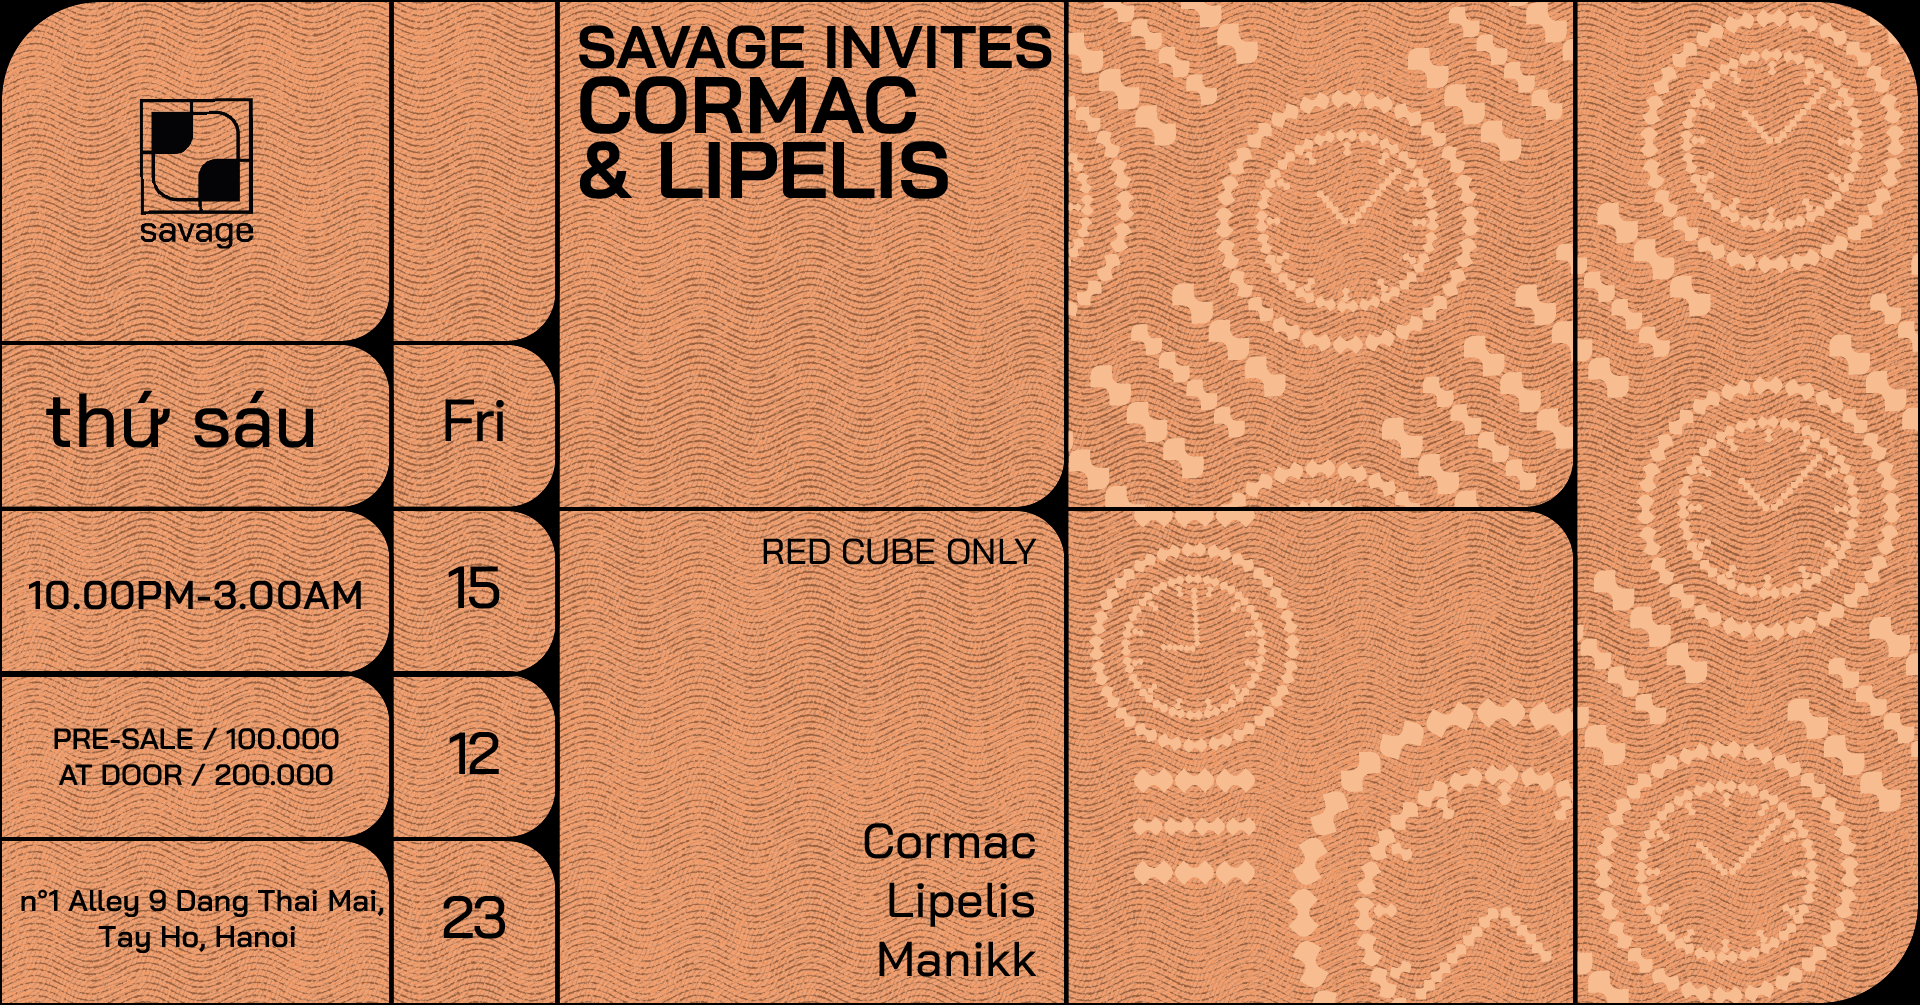 Savage Invites Cormac & Lipelis - フライヤー裏